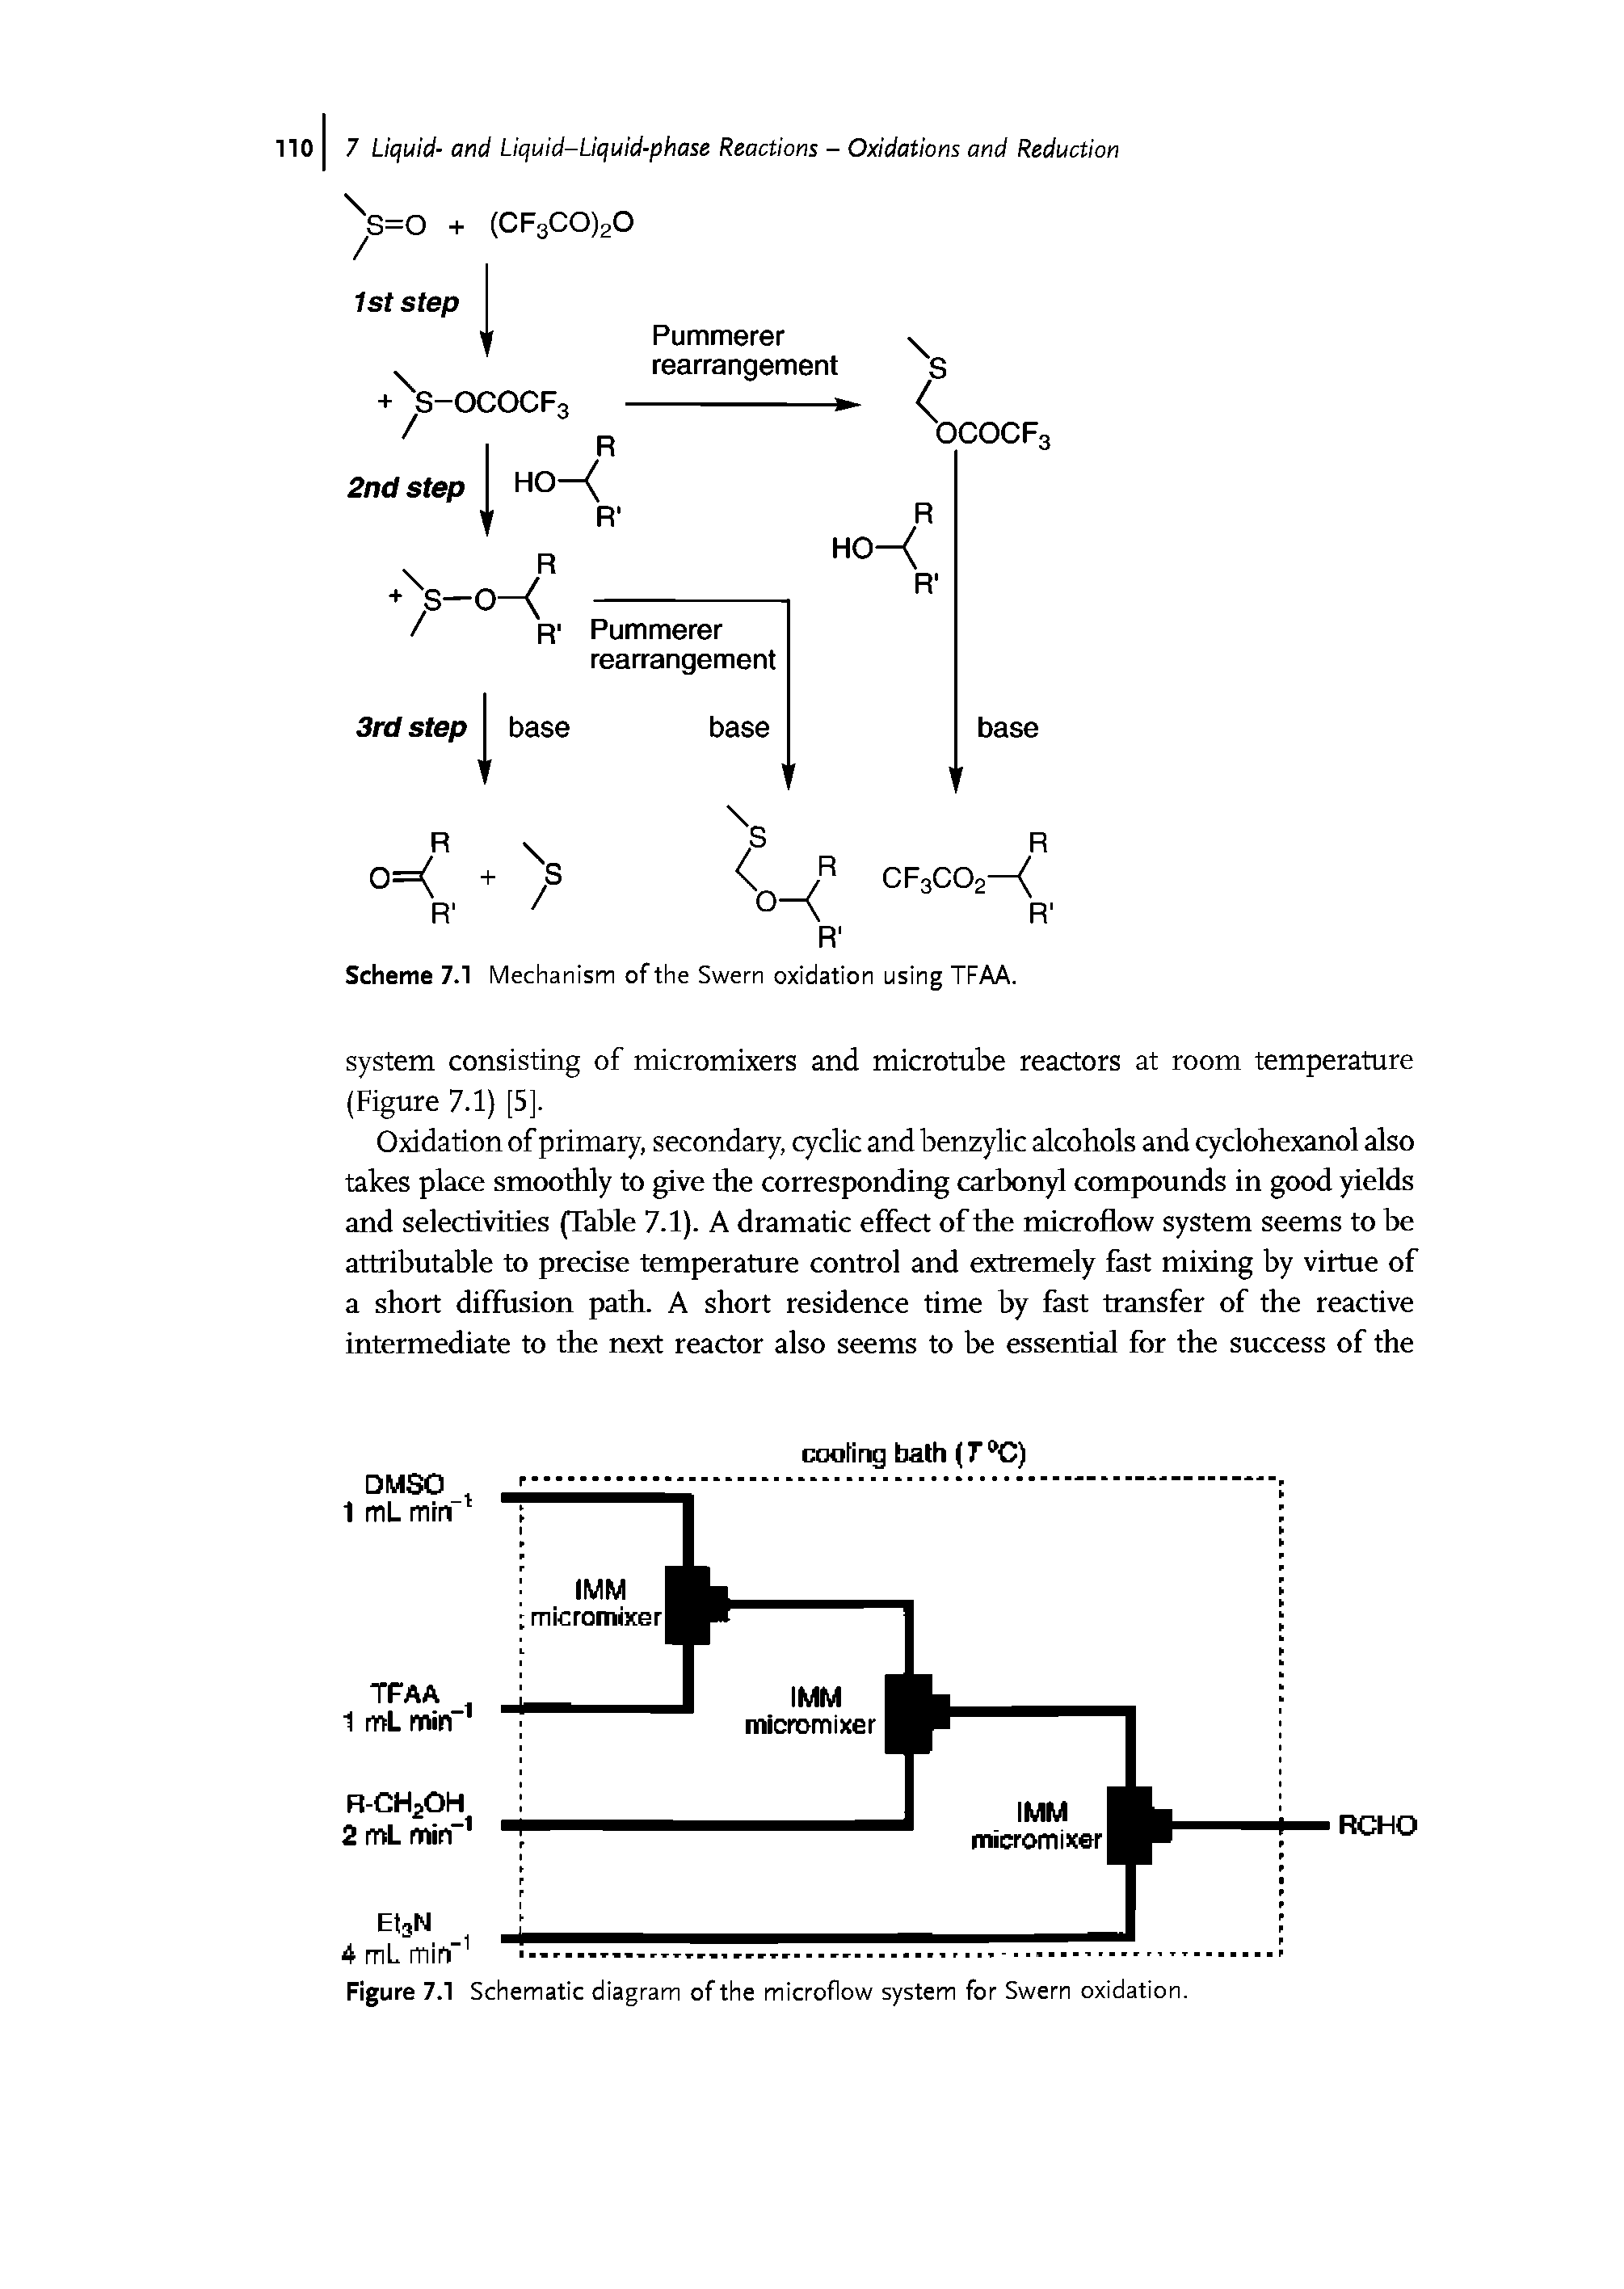 Scheme 7.1 Mechanism of the Swern oxidation using TFAA.